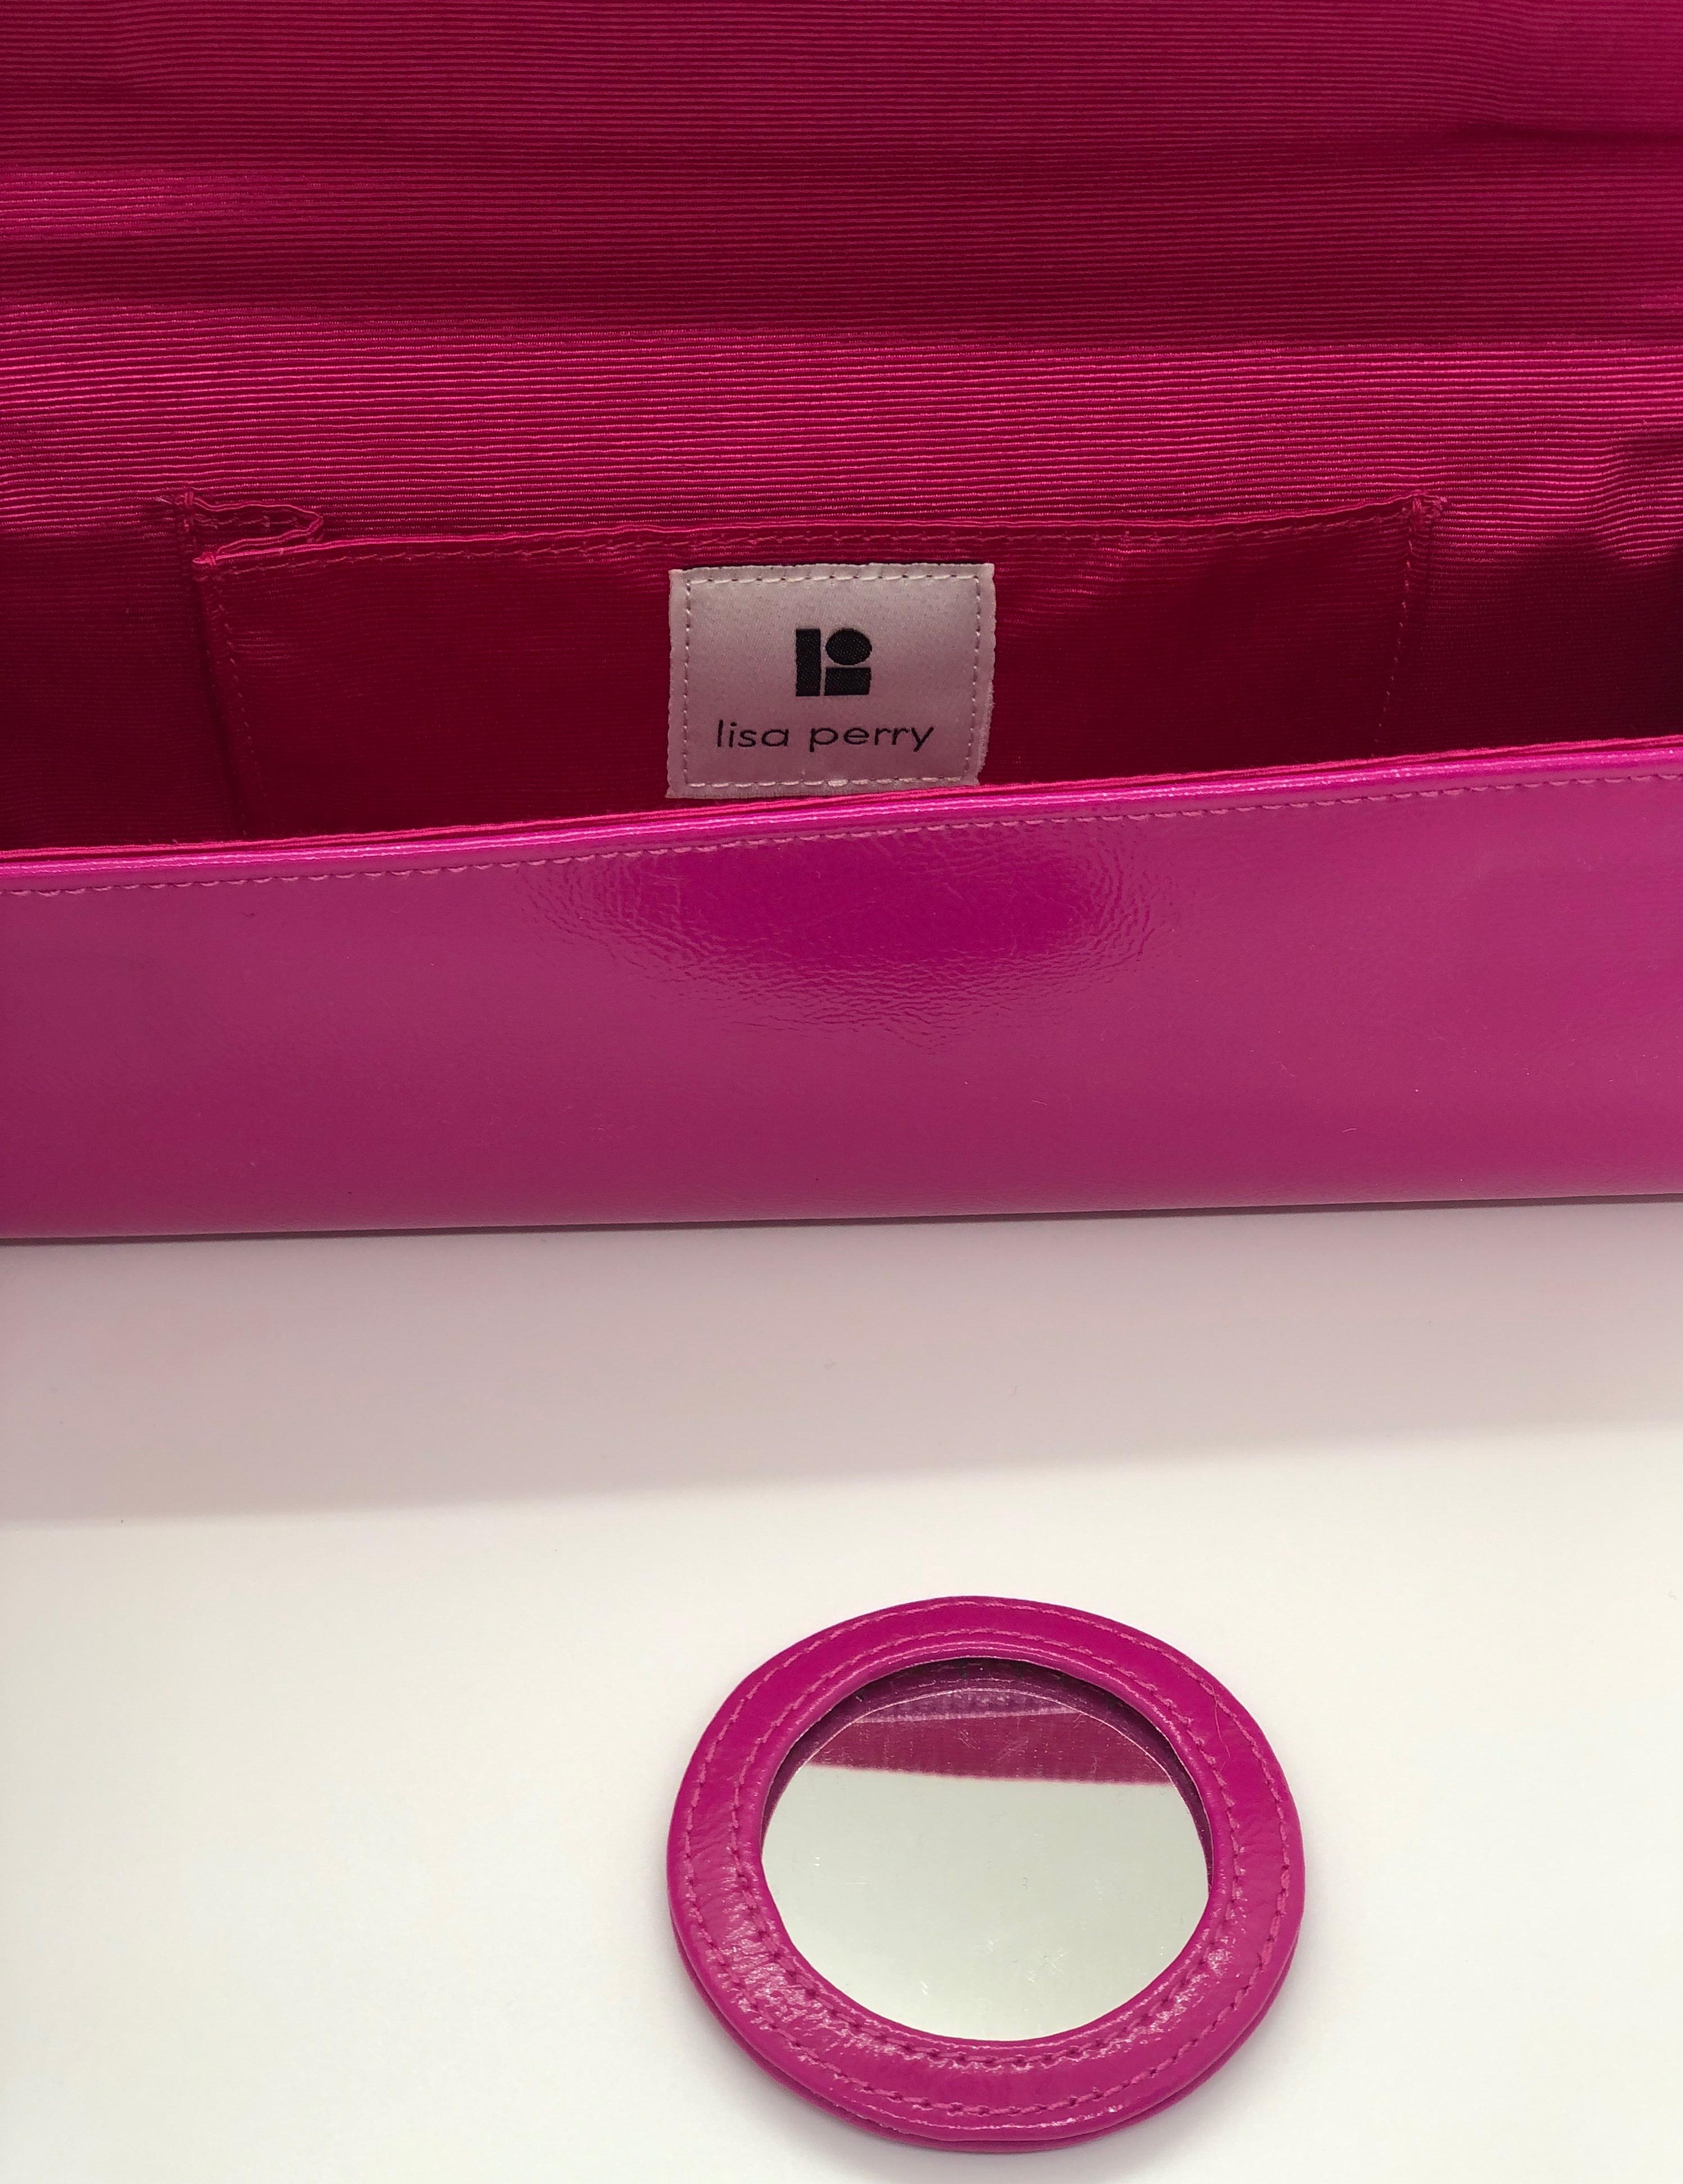 Lisa Perry Mod Fuchsia Pink Patent Leather Clutch Handbag w/ Magnetic Closure  10